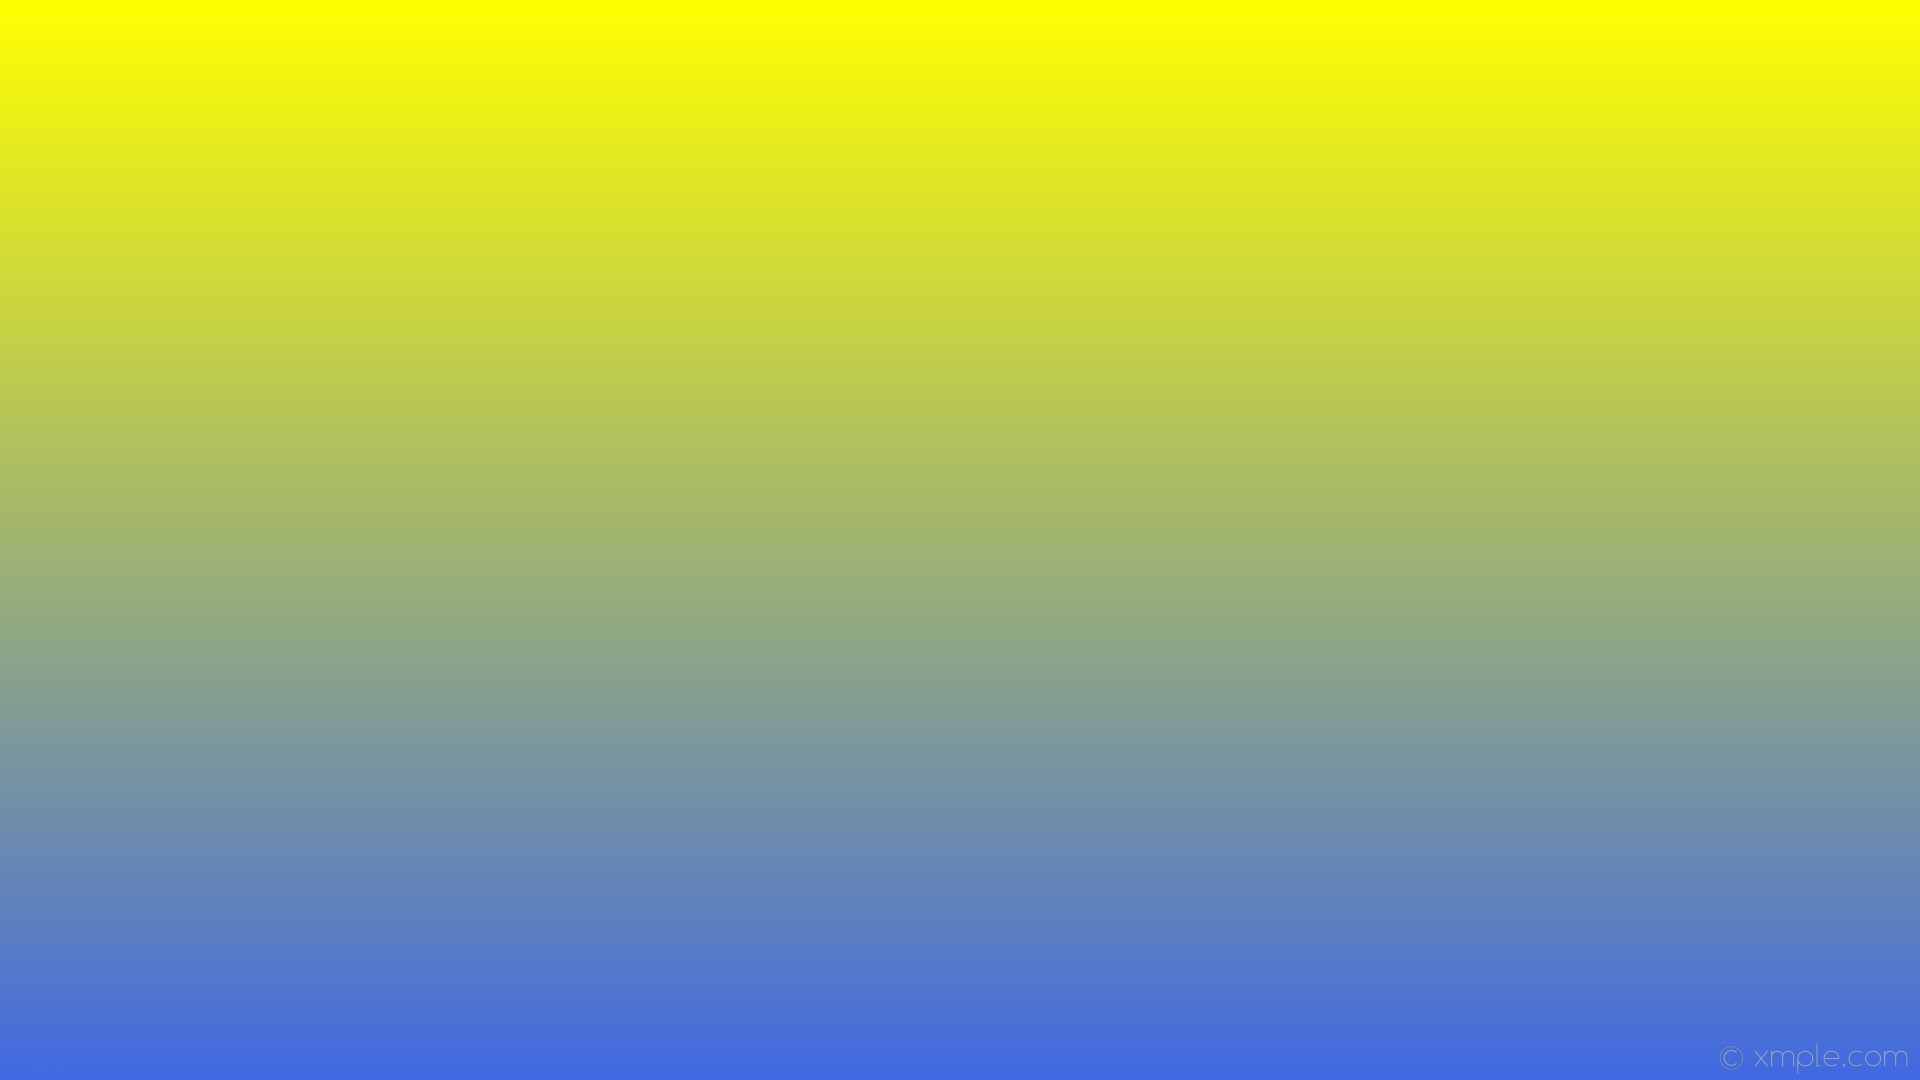 1920x1080 wallpaper yellow blue gradient linear royal blue #ffff00 #4169e1 90Â°